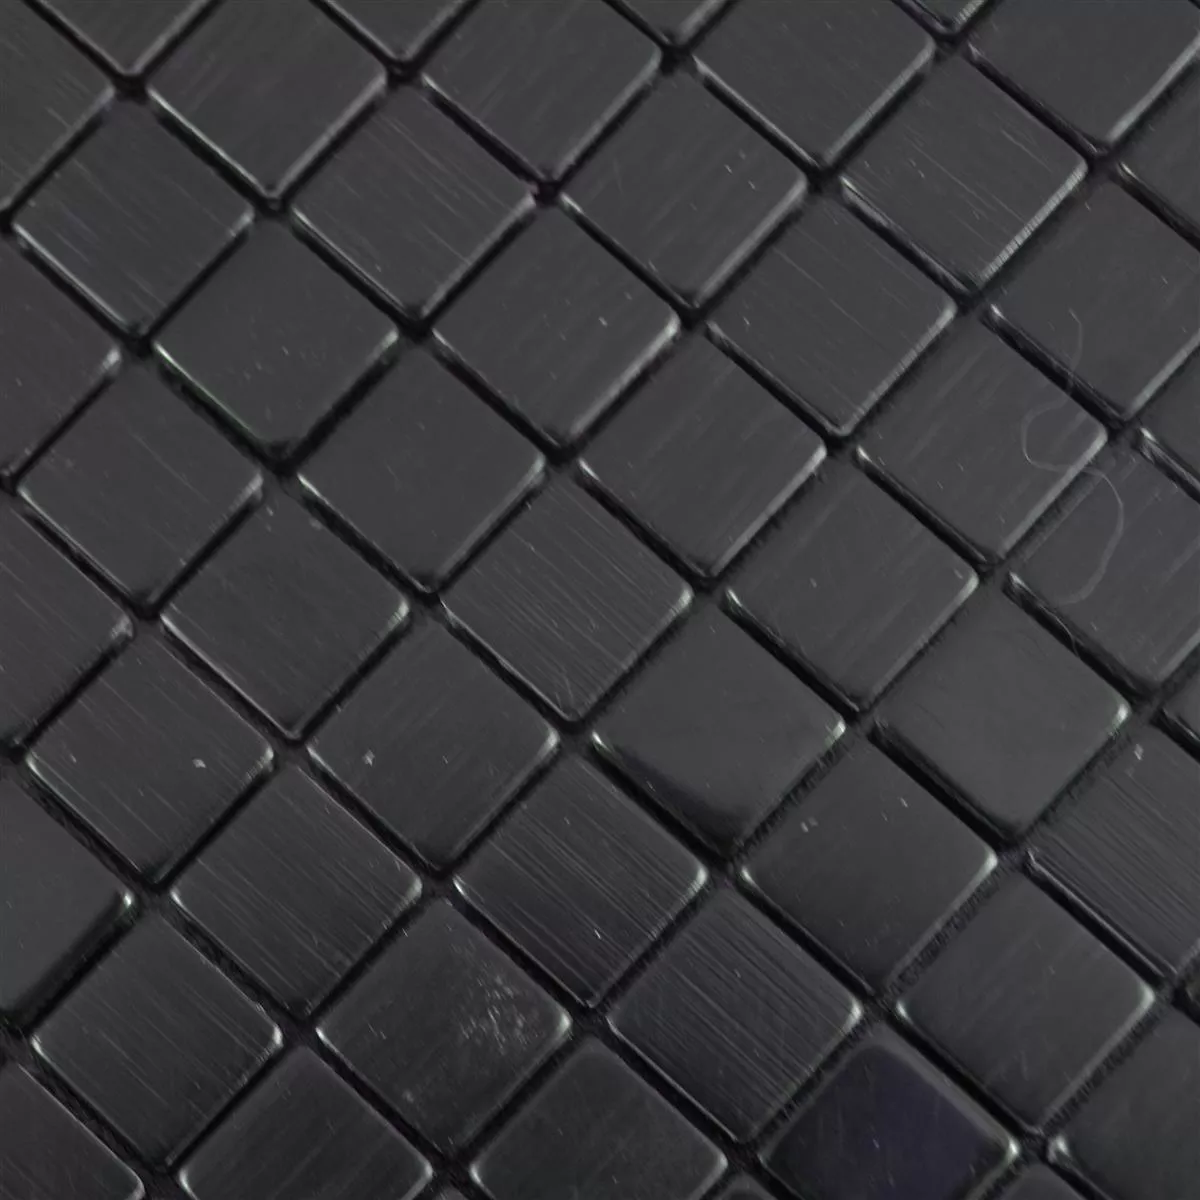 Sample Metal Mosaic Tiles Wygon Self Adhesive Black 